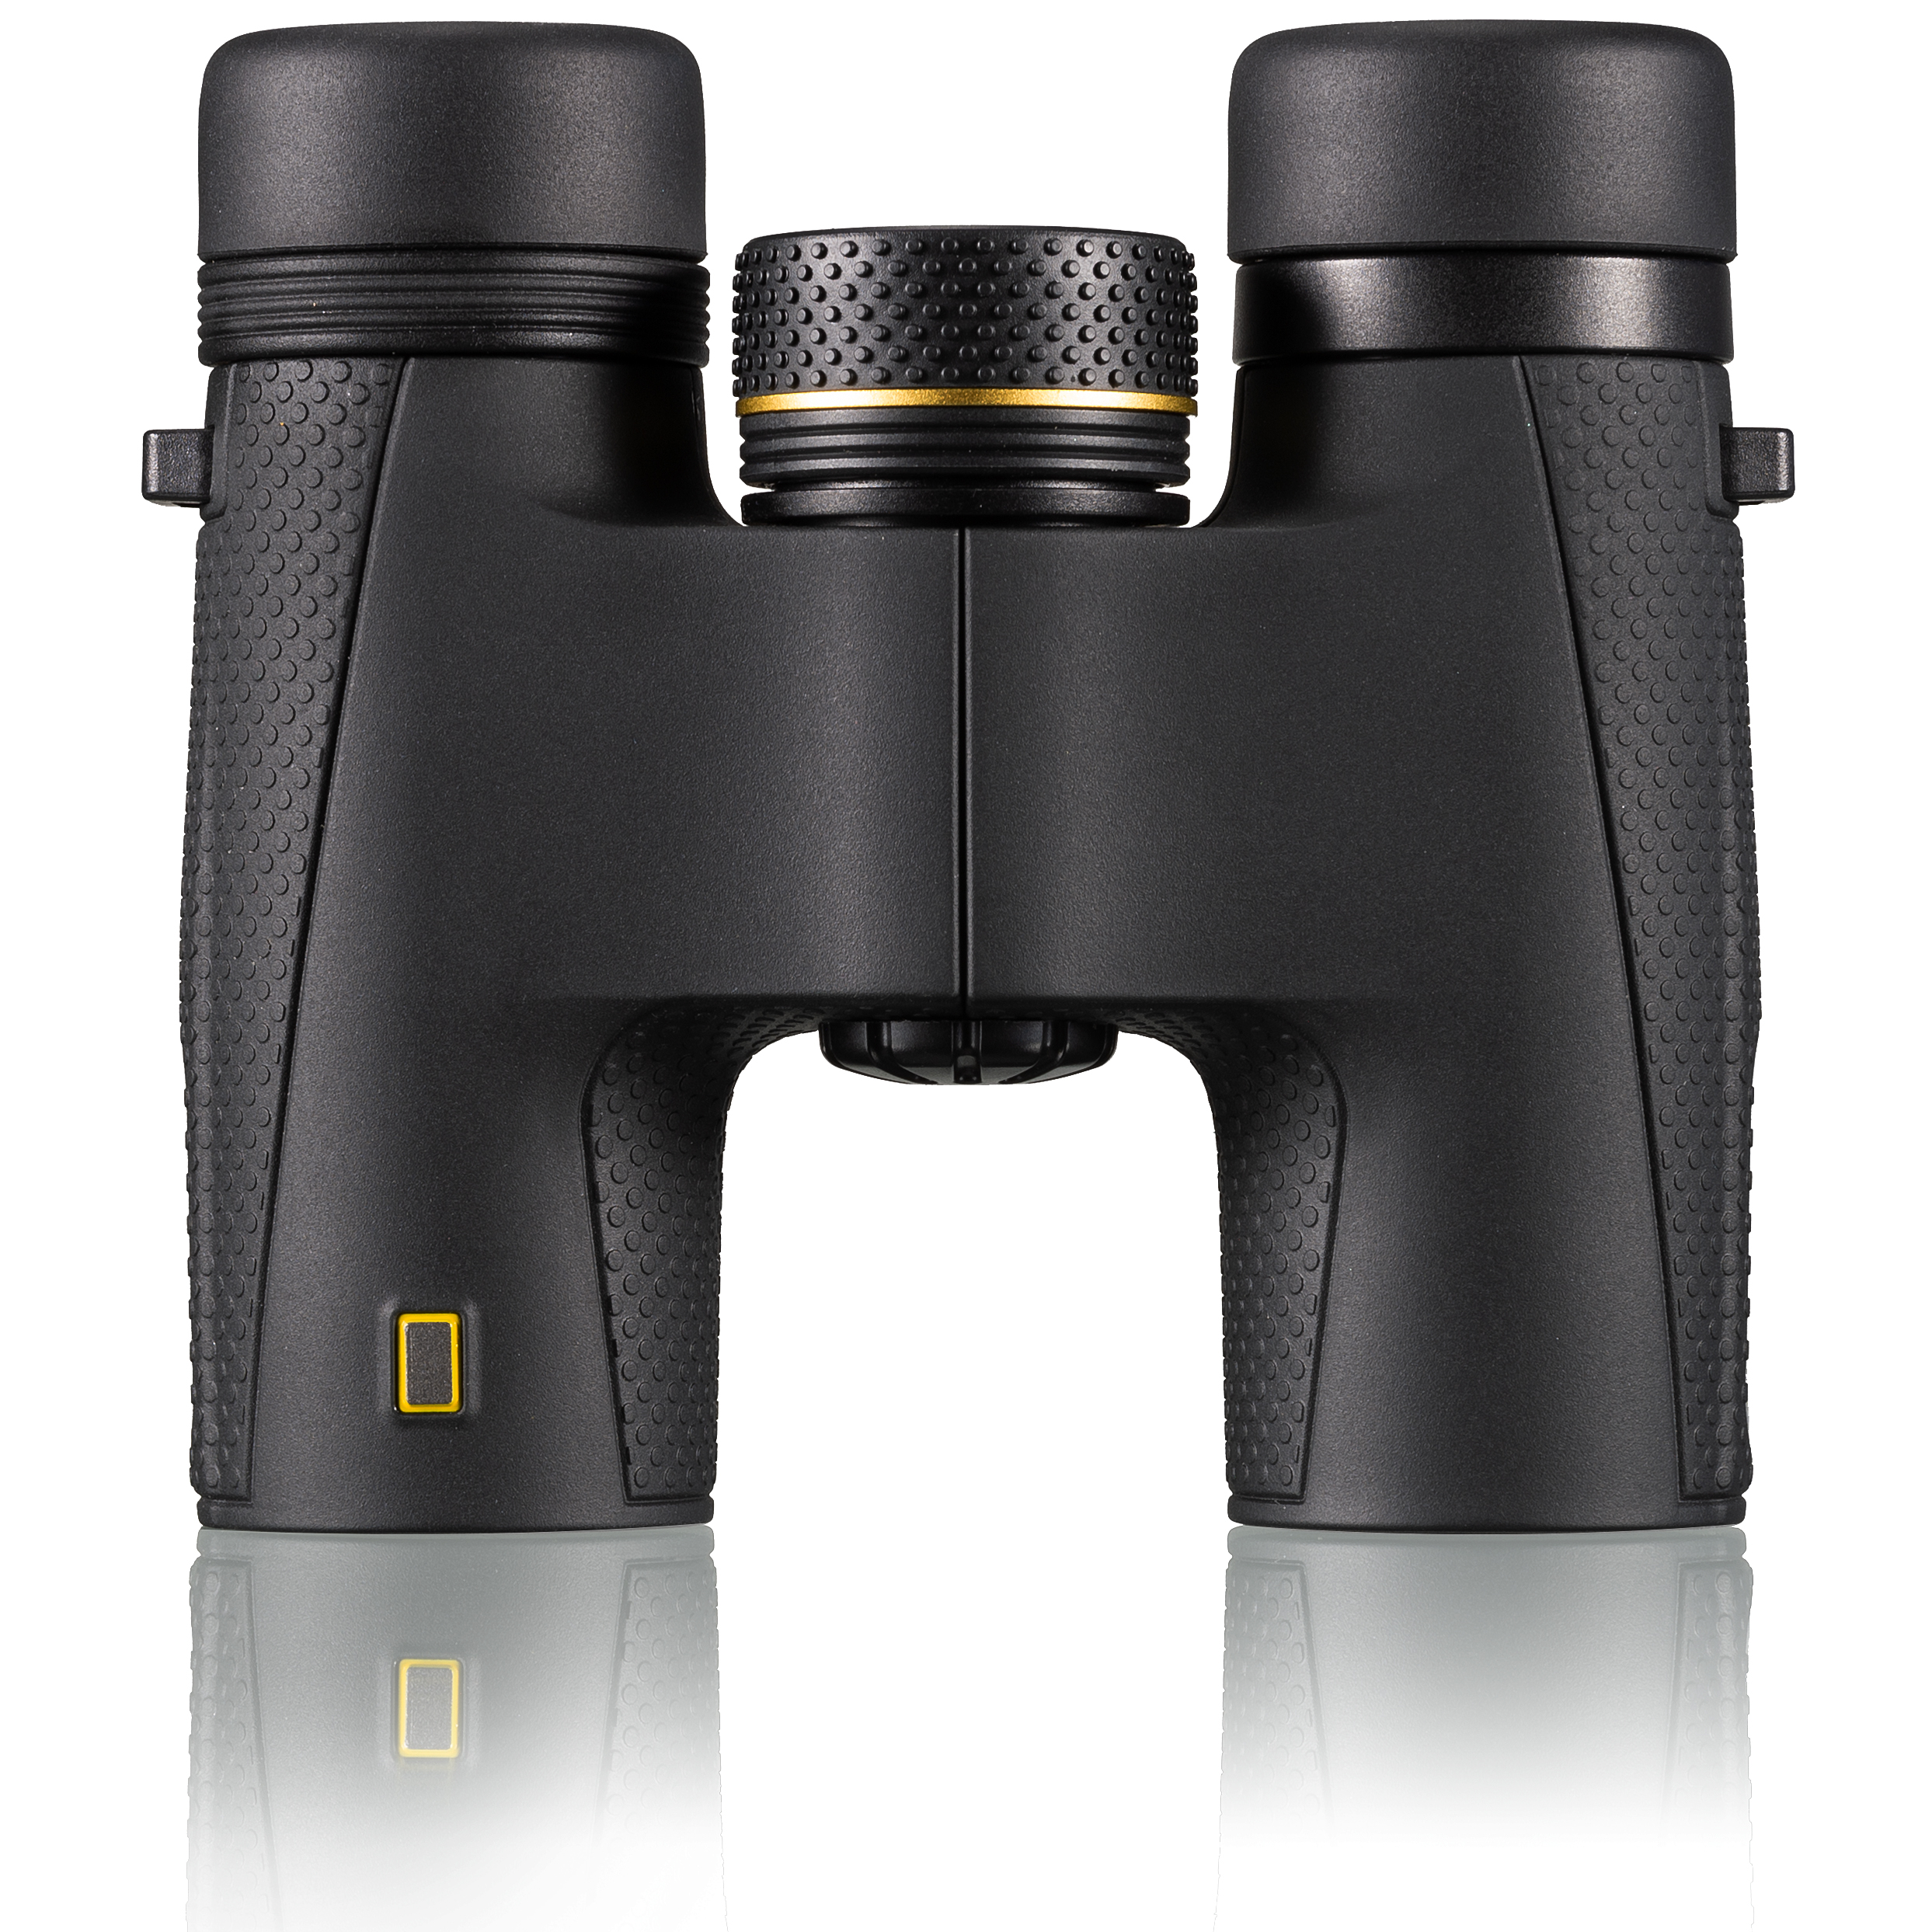 NATIONAL GEOGRAPHIC 8x25 compact binoculars waterproof